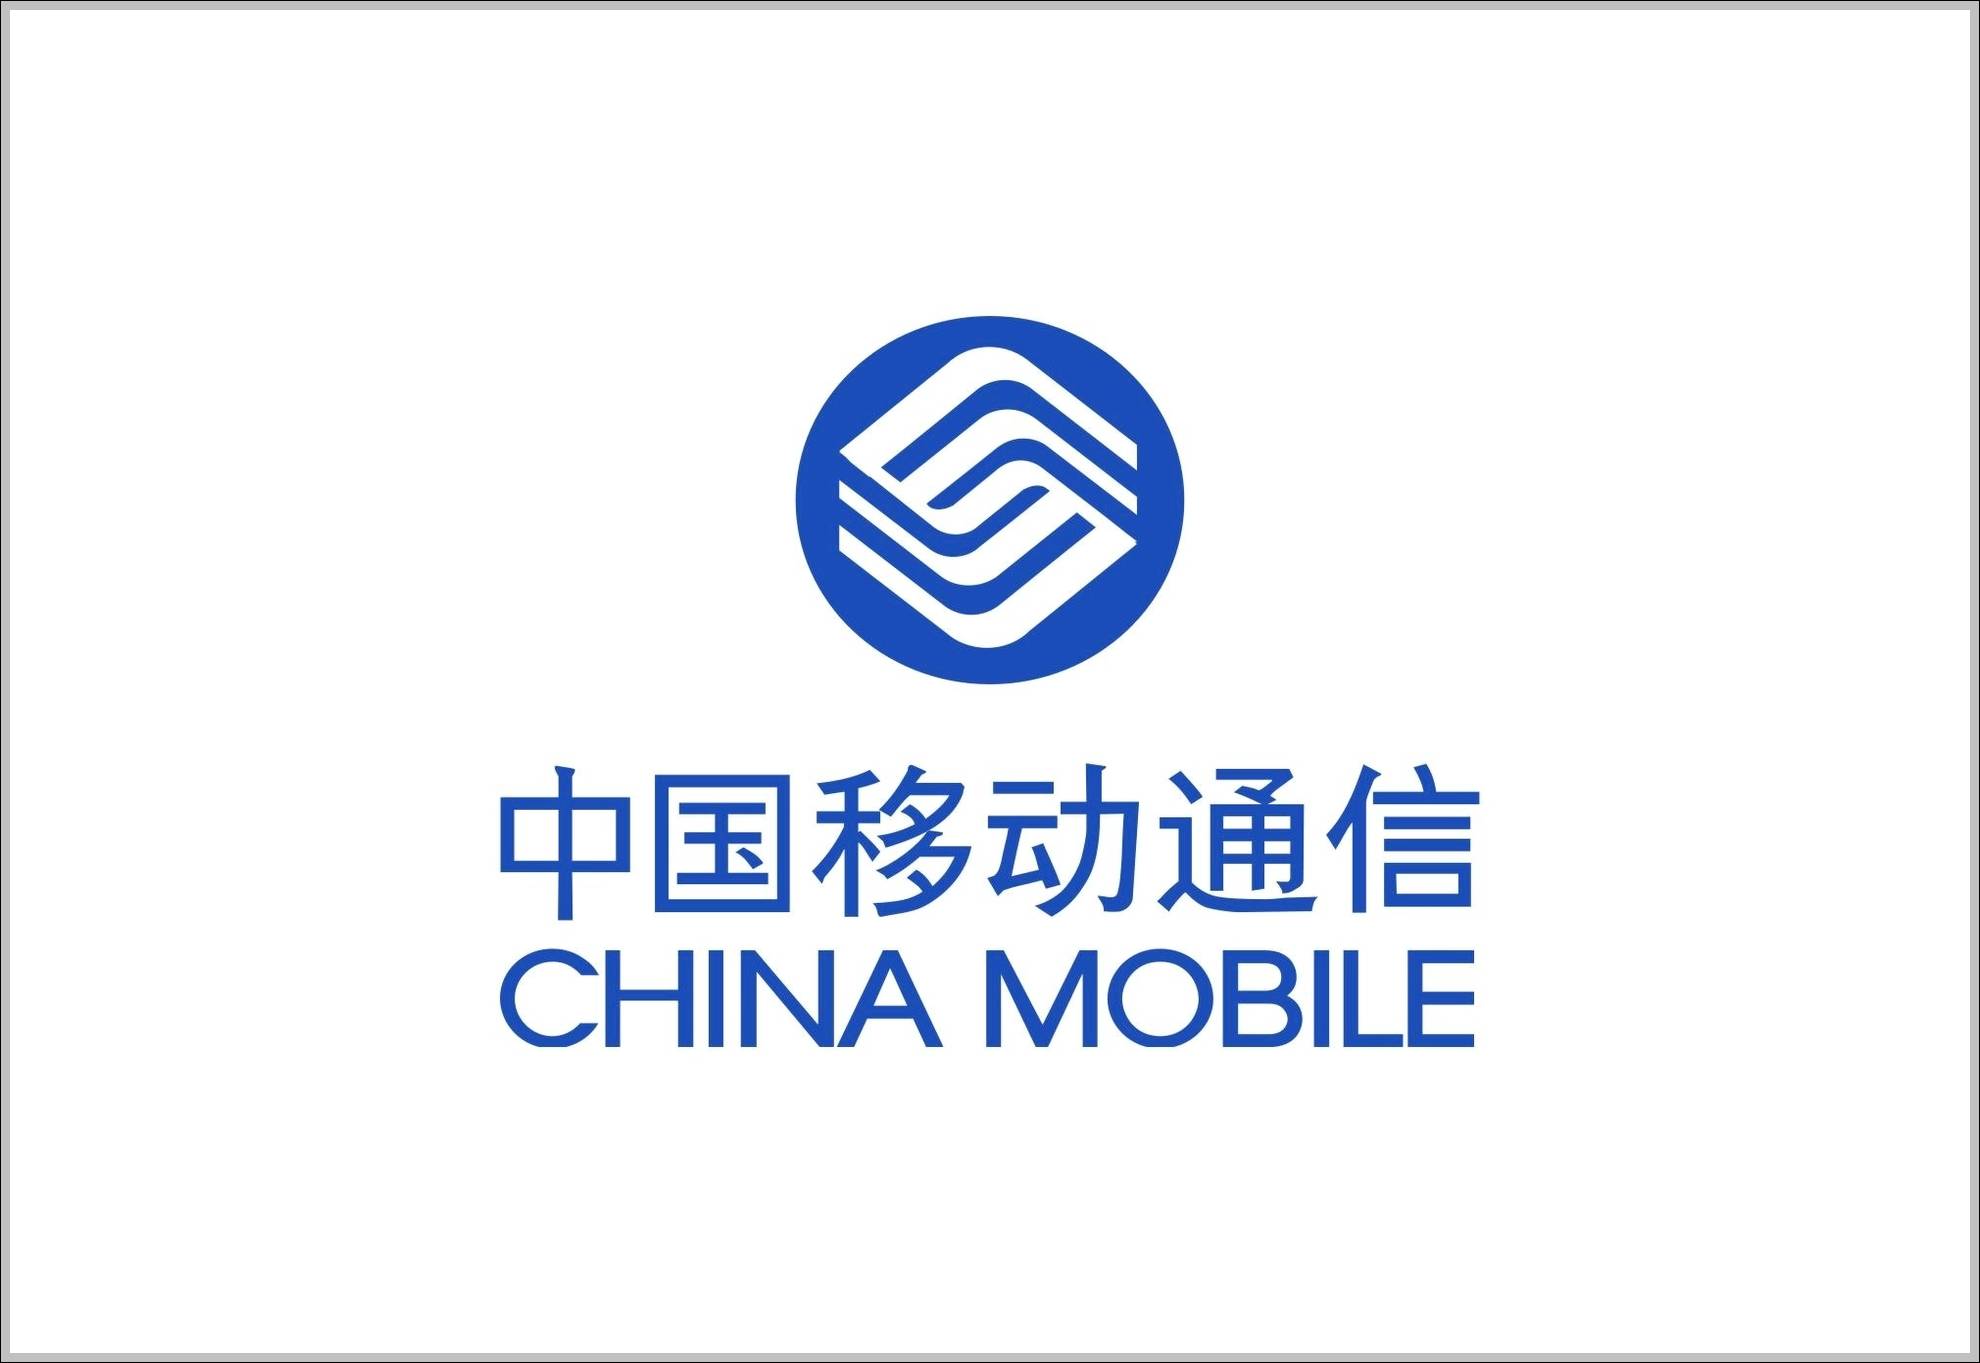 China Mobile logo old